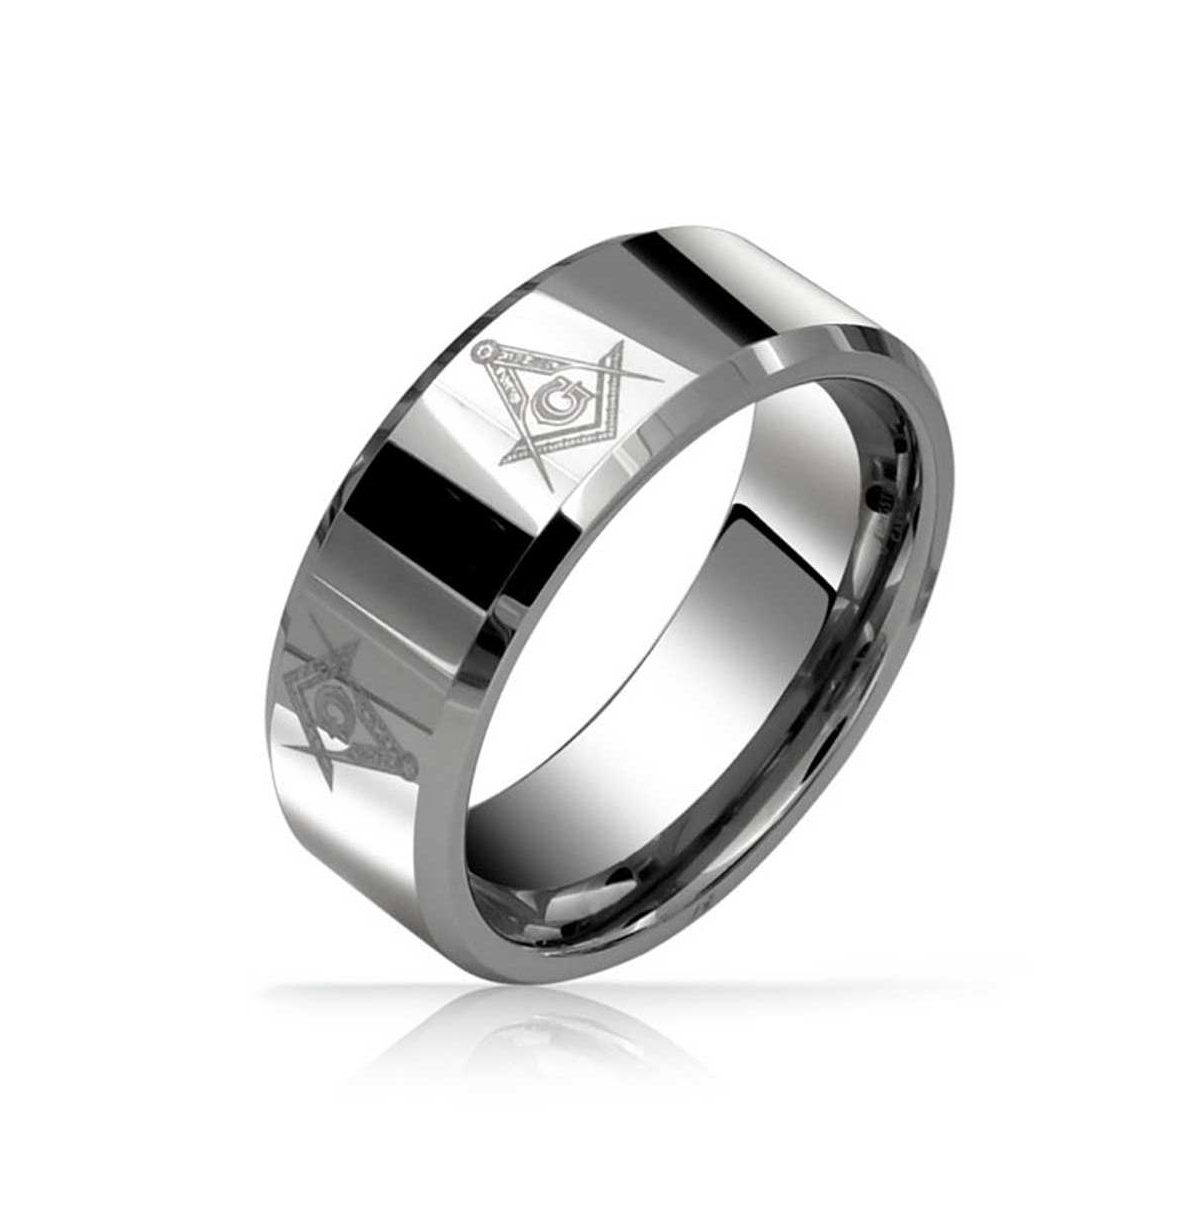 Square Compass Freemason Masonic Titanium Wedding Band Ring For Men Polished Silver Tone Comfort Fit 8MM - Silver